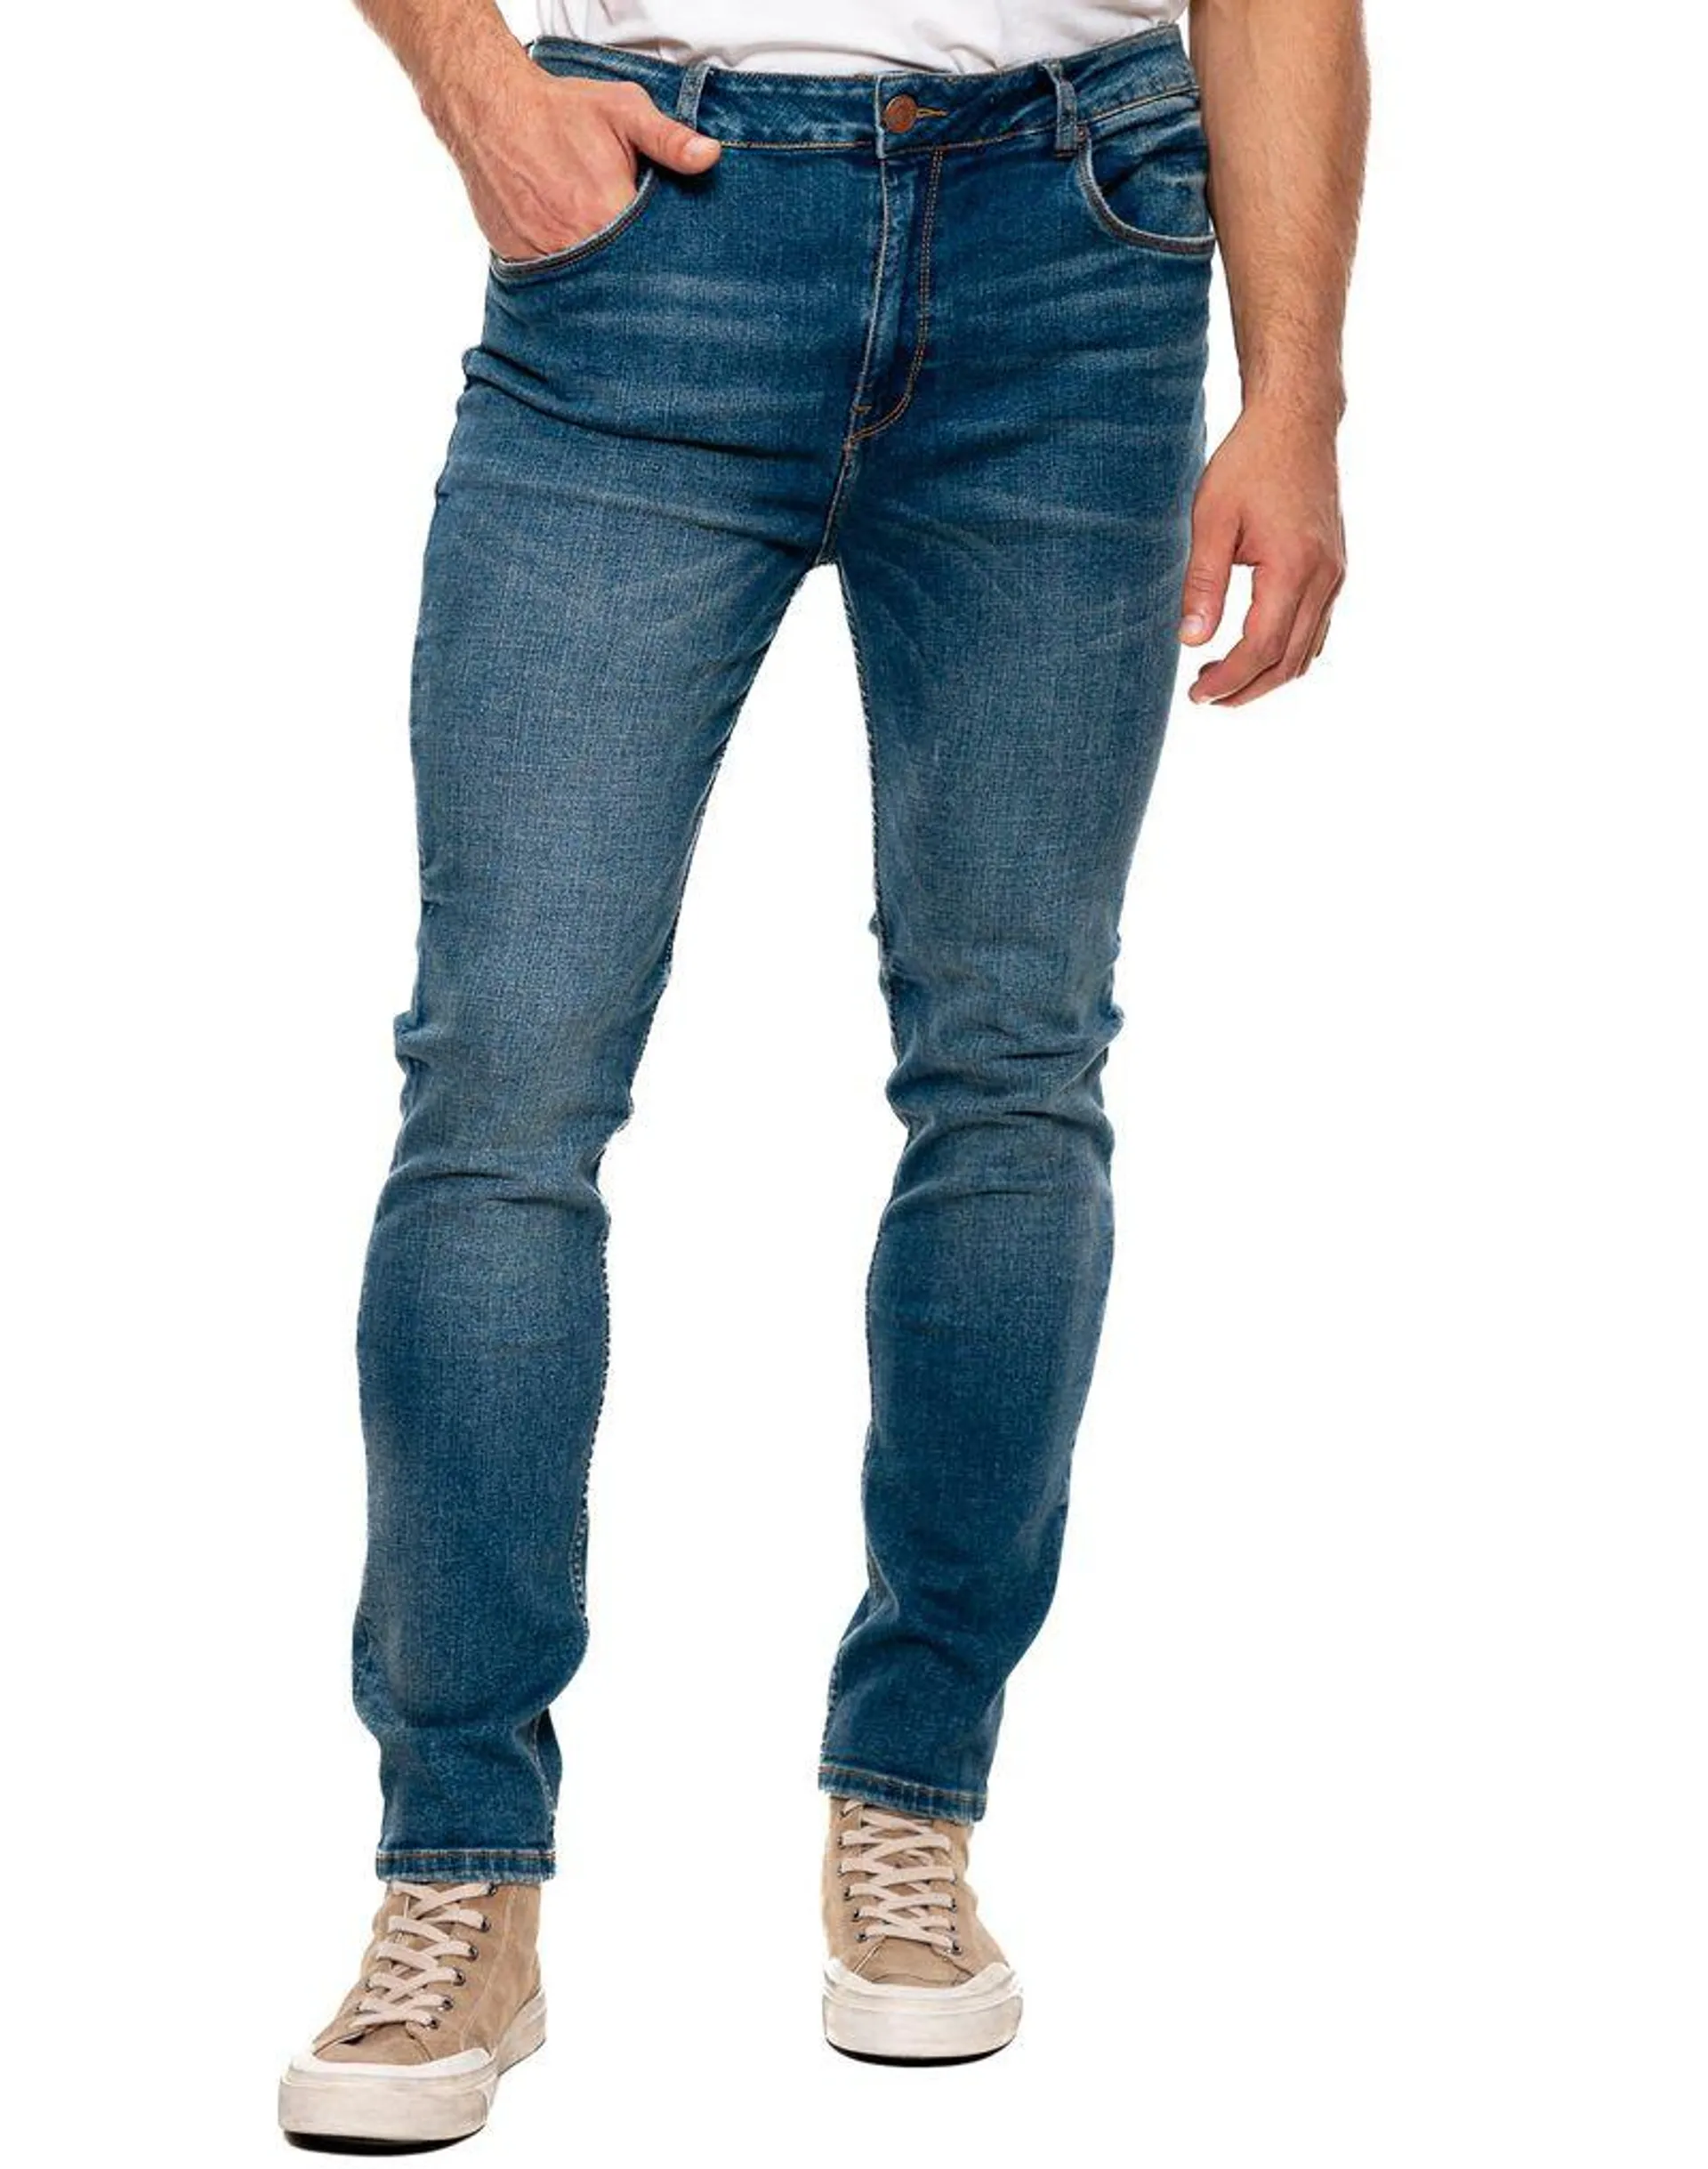 Jeans Slim Fit Medium Waist Con Lavado Dirty